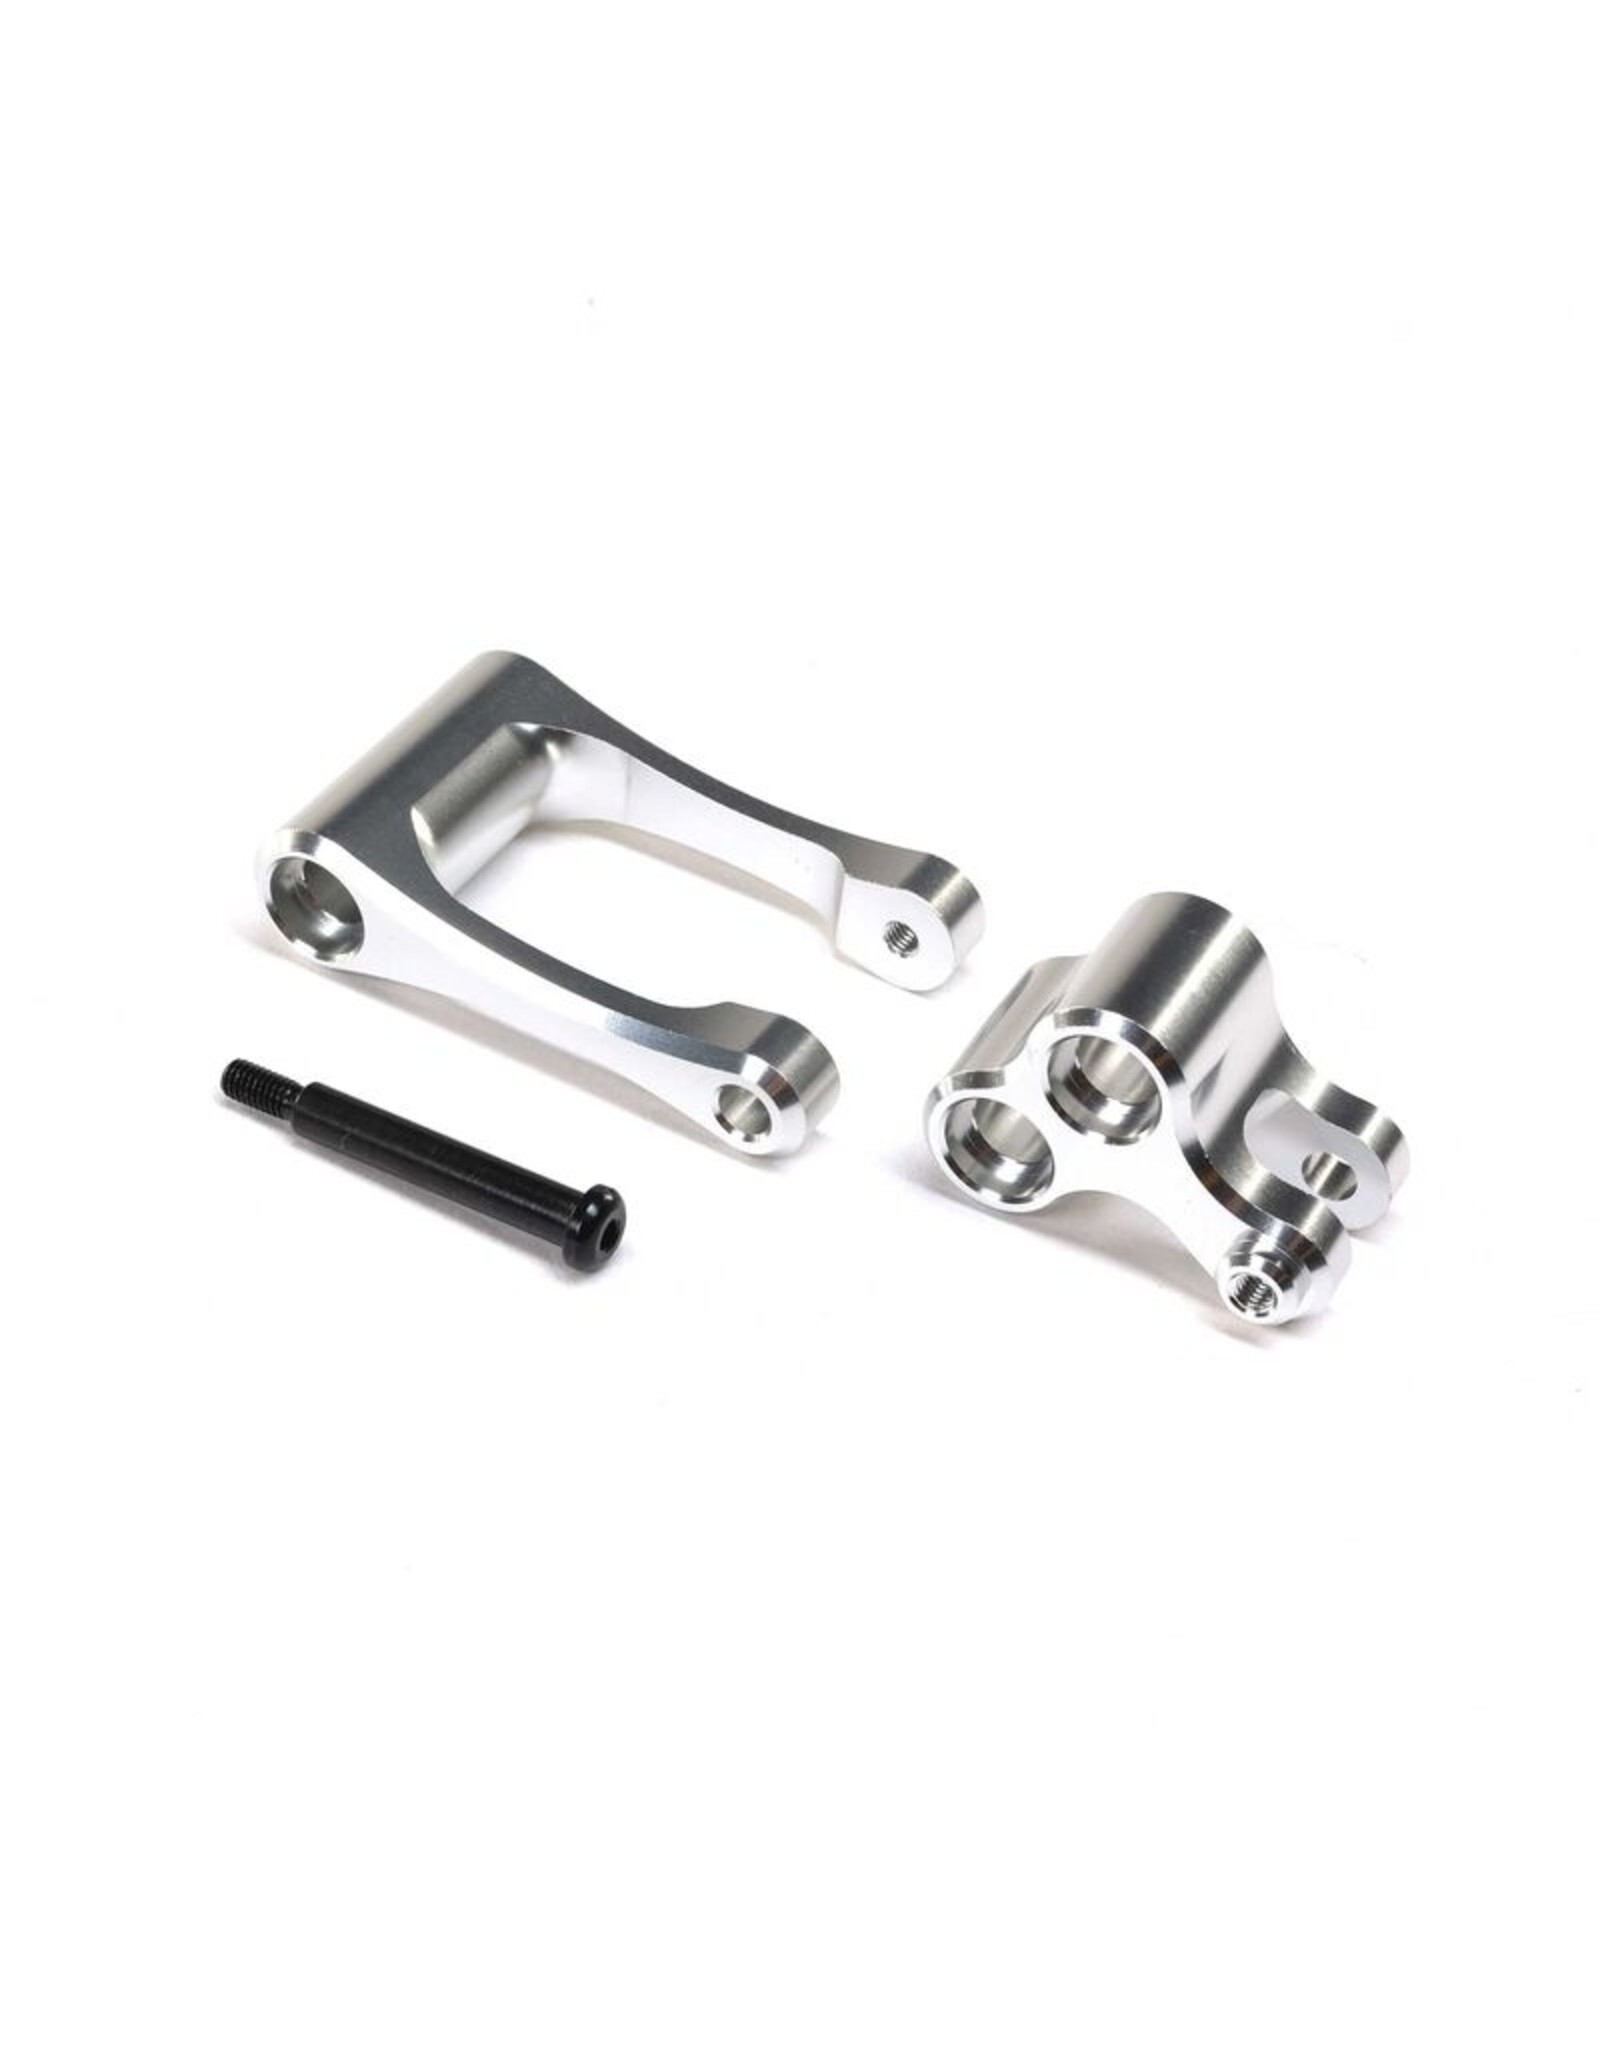 Losi LOS364001 Aluminum Knuckle & Pull Rod, Silver: PM-MX